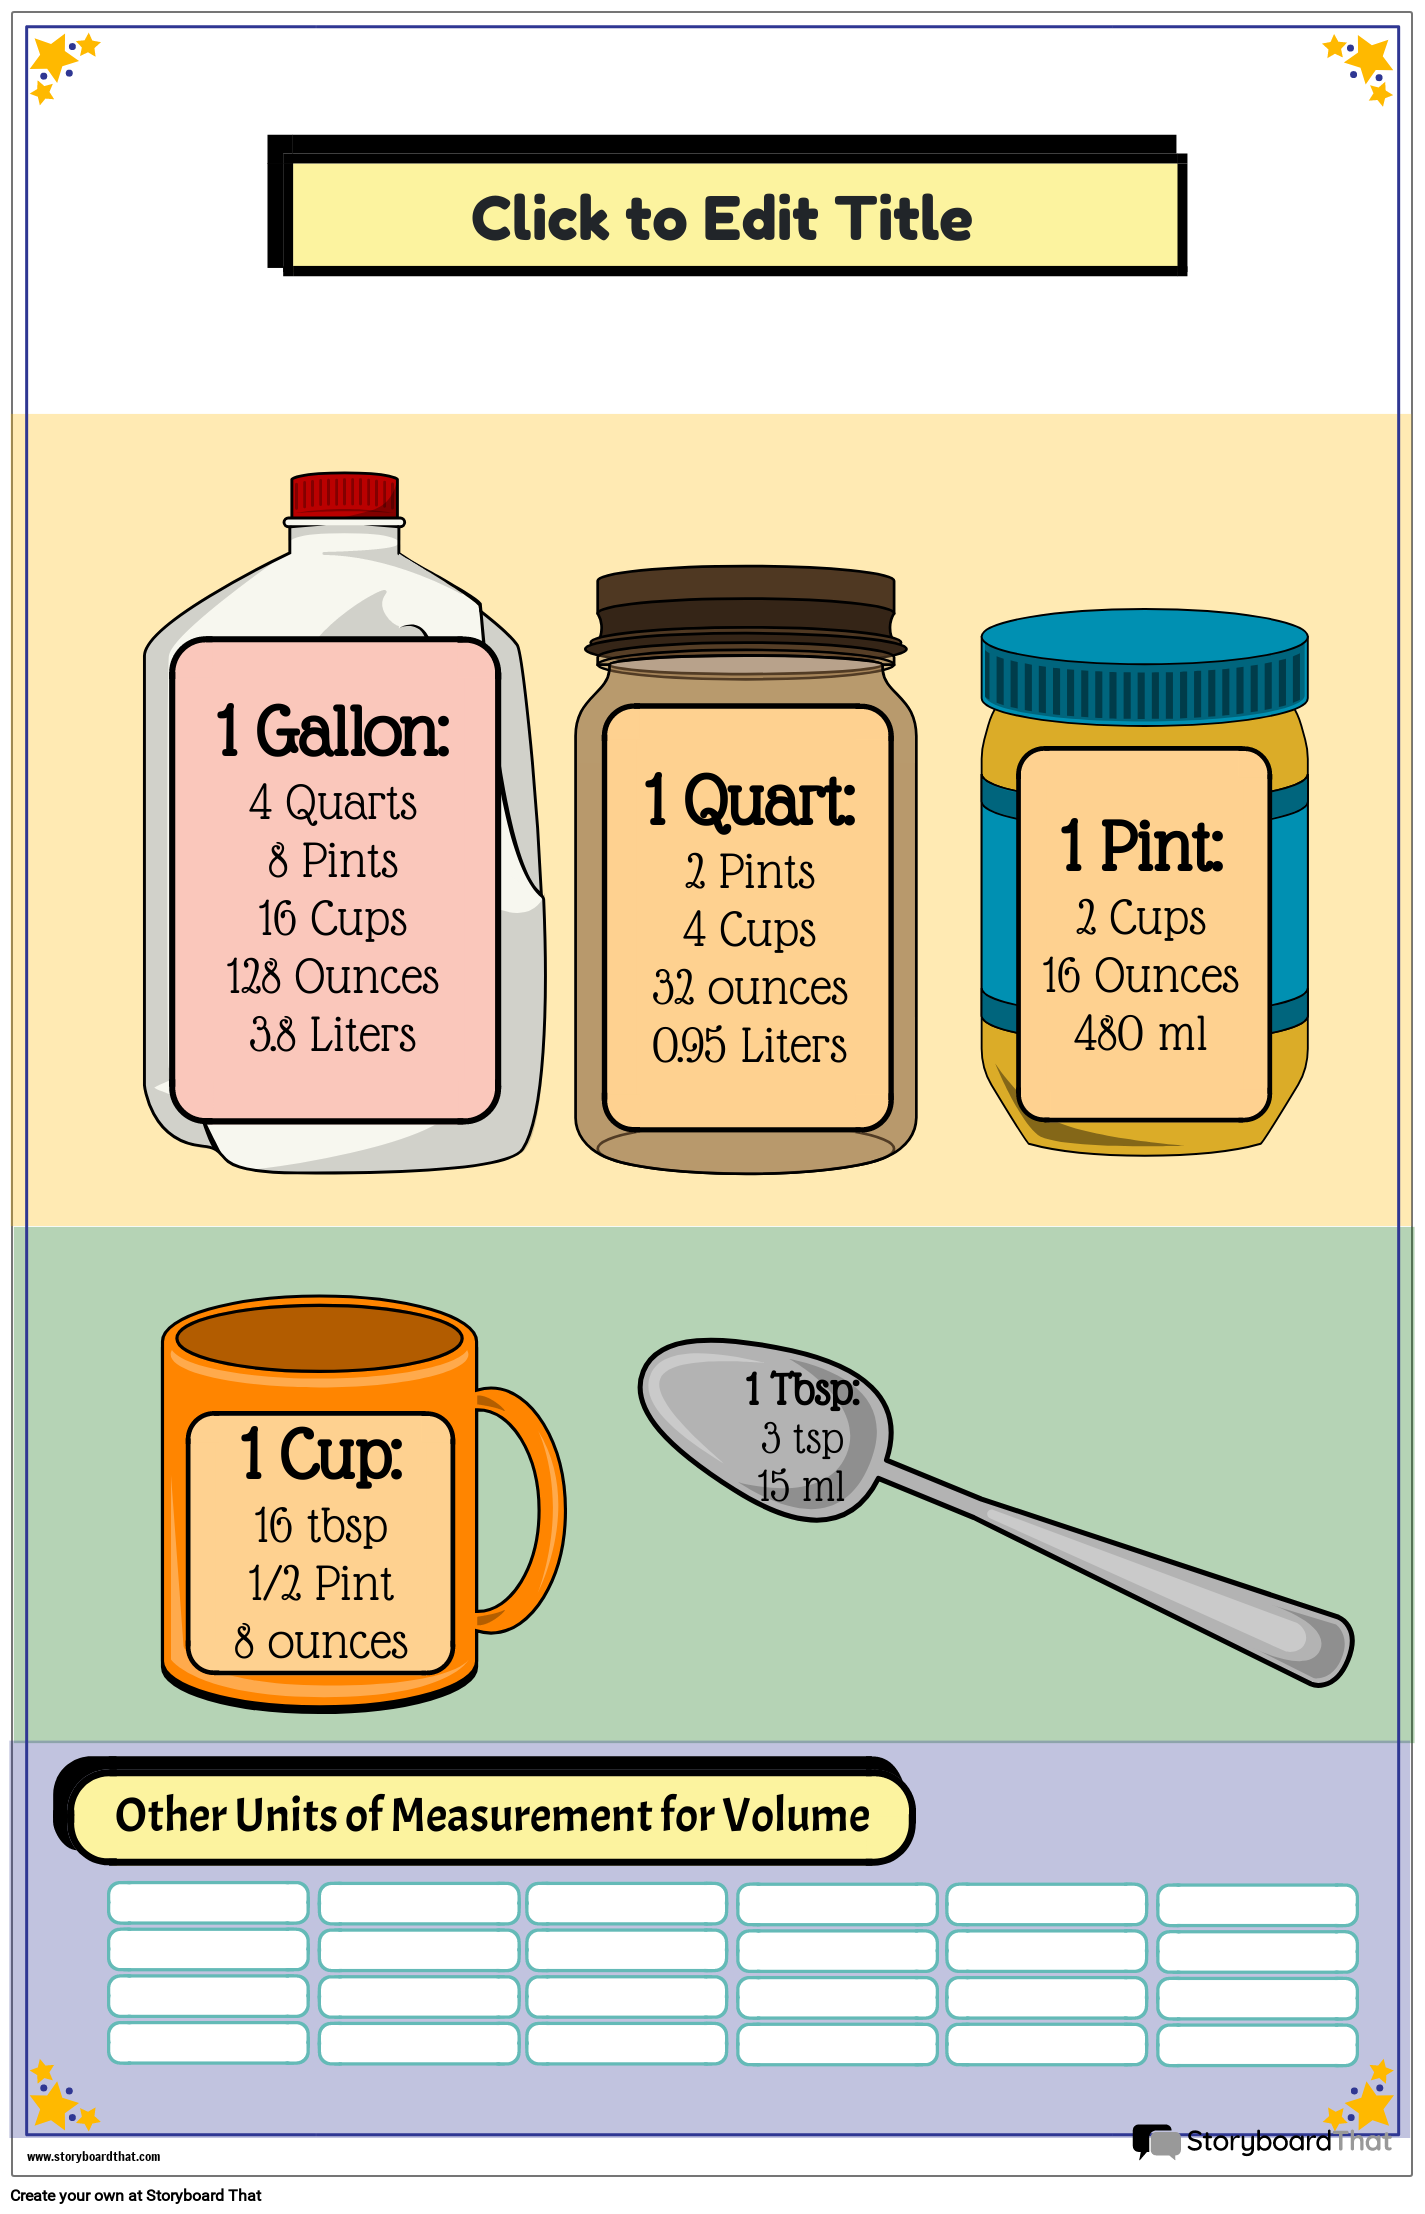 Common Units of Measurement